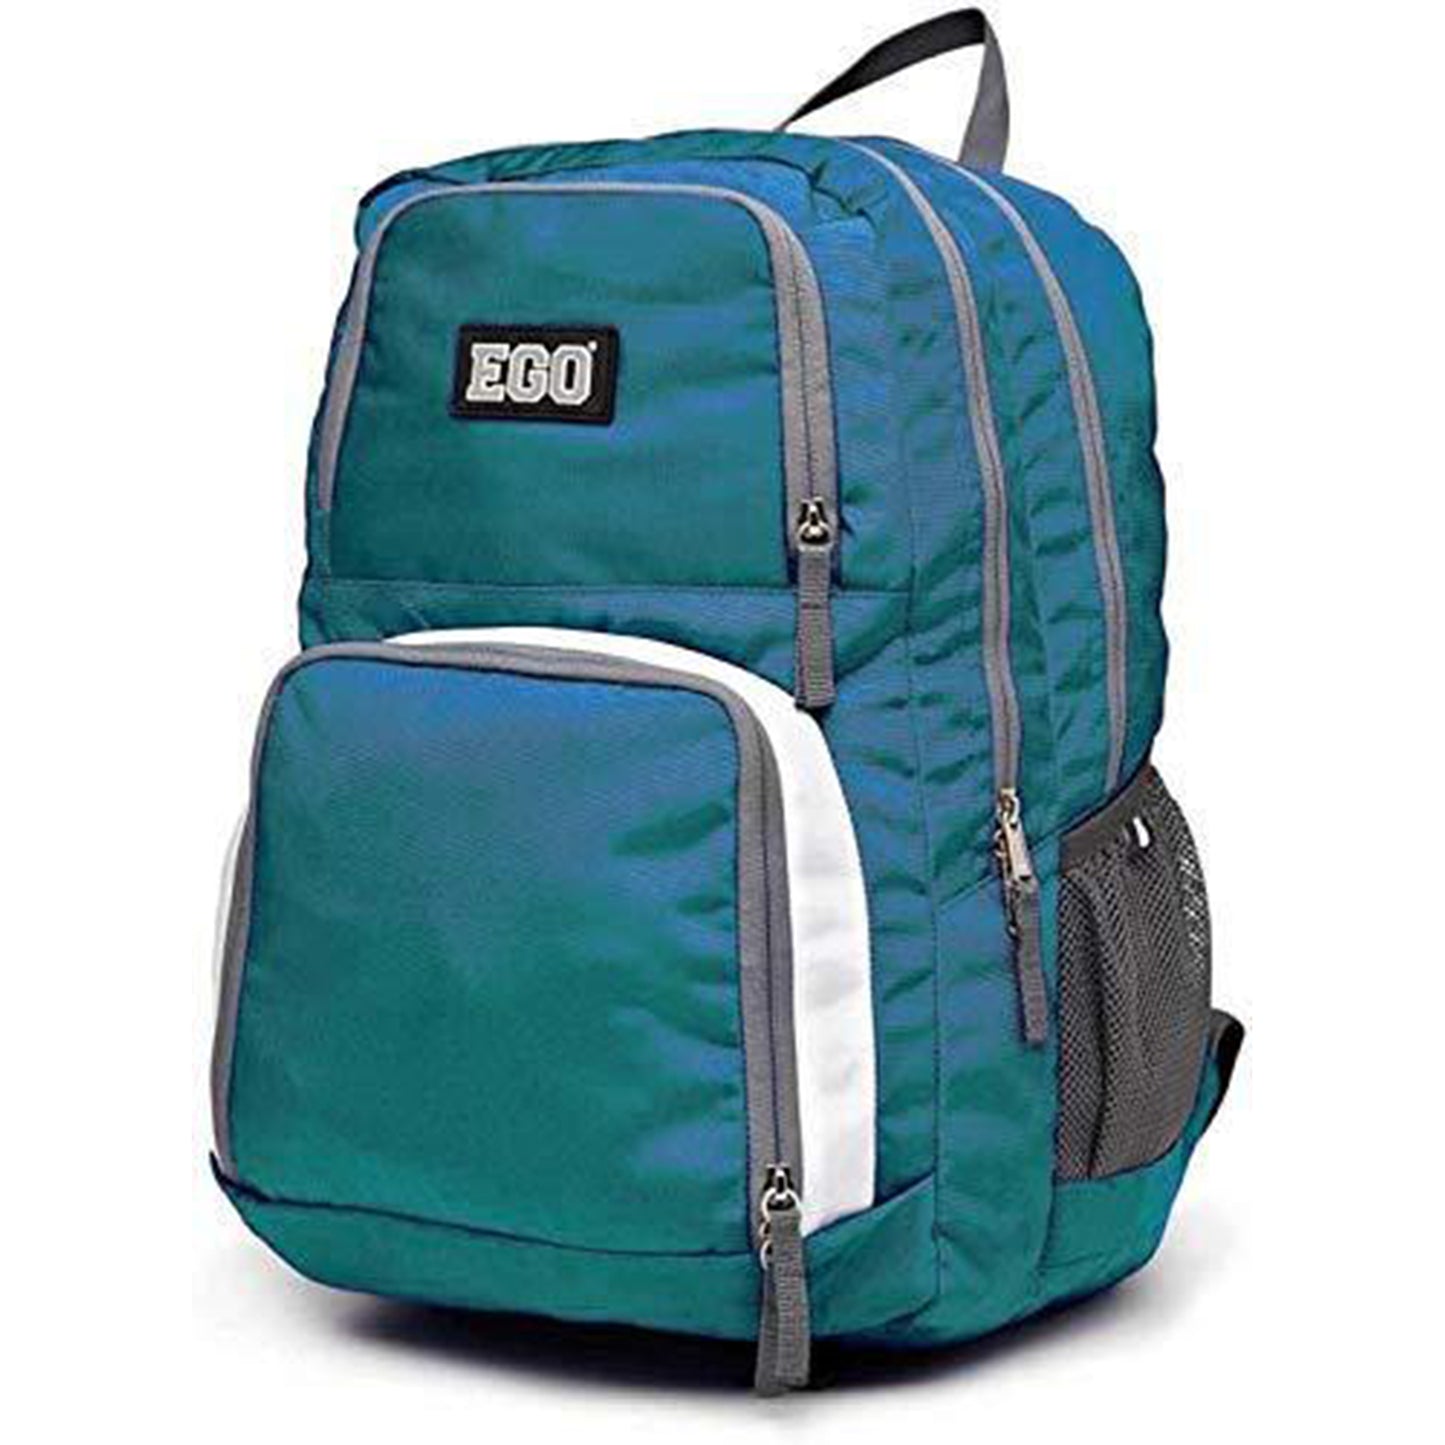 Prokick Ego 33 Ltrs Large Lite Weight Waterproof Casual Backpack |Travel Bag | School Bag, Indigo - Best Price online Prokicksports.com